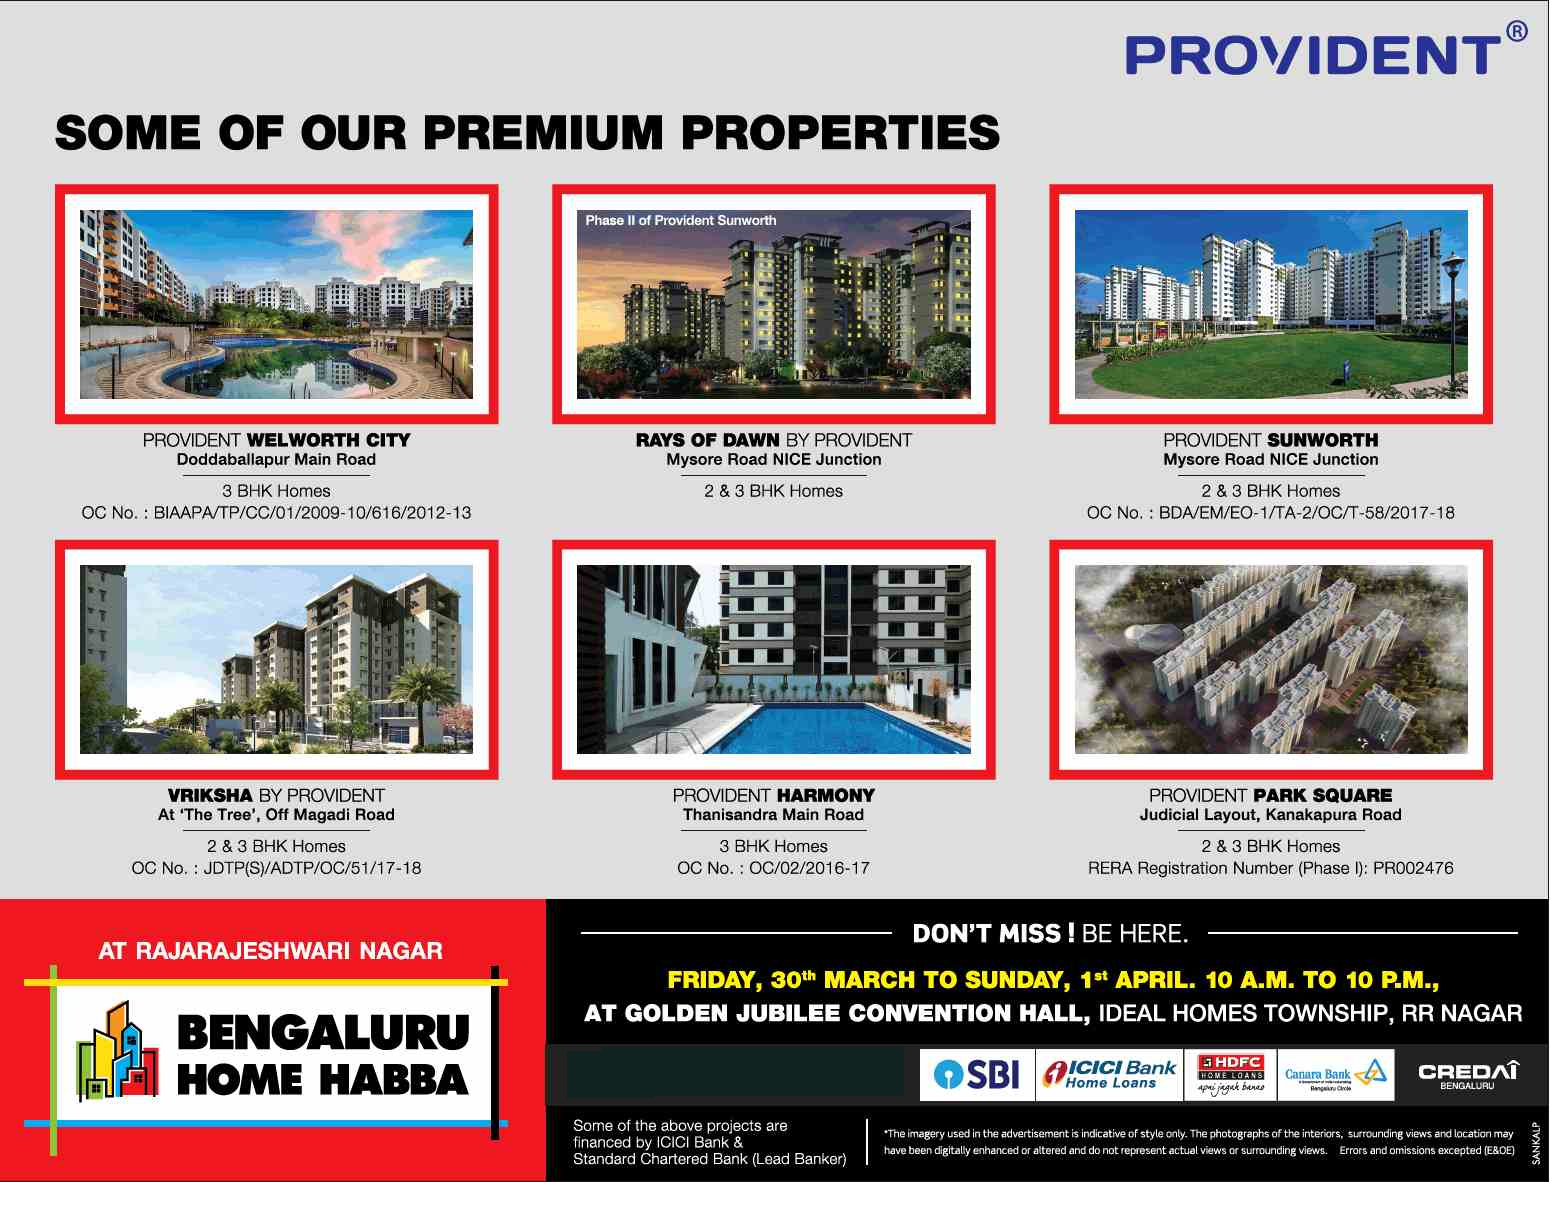 Invest in Premium Properties by Provident Housing in Bengaluru